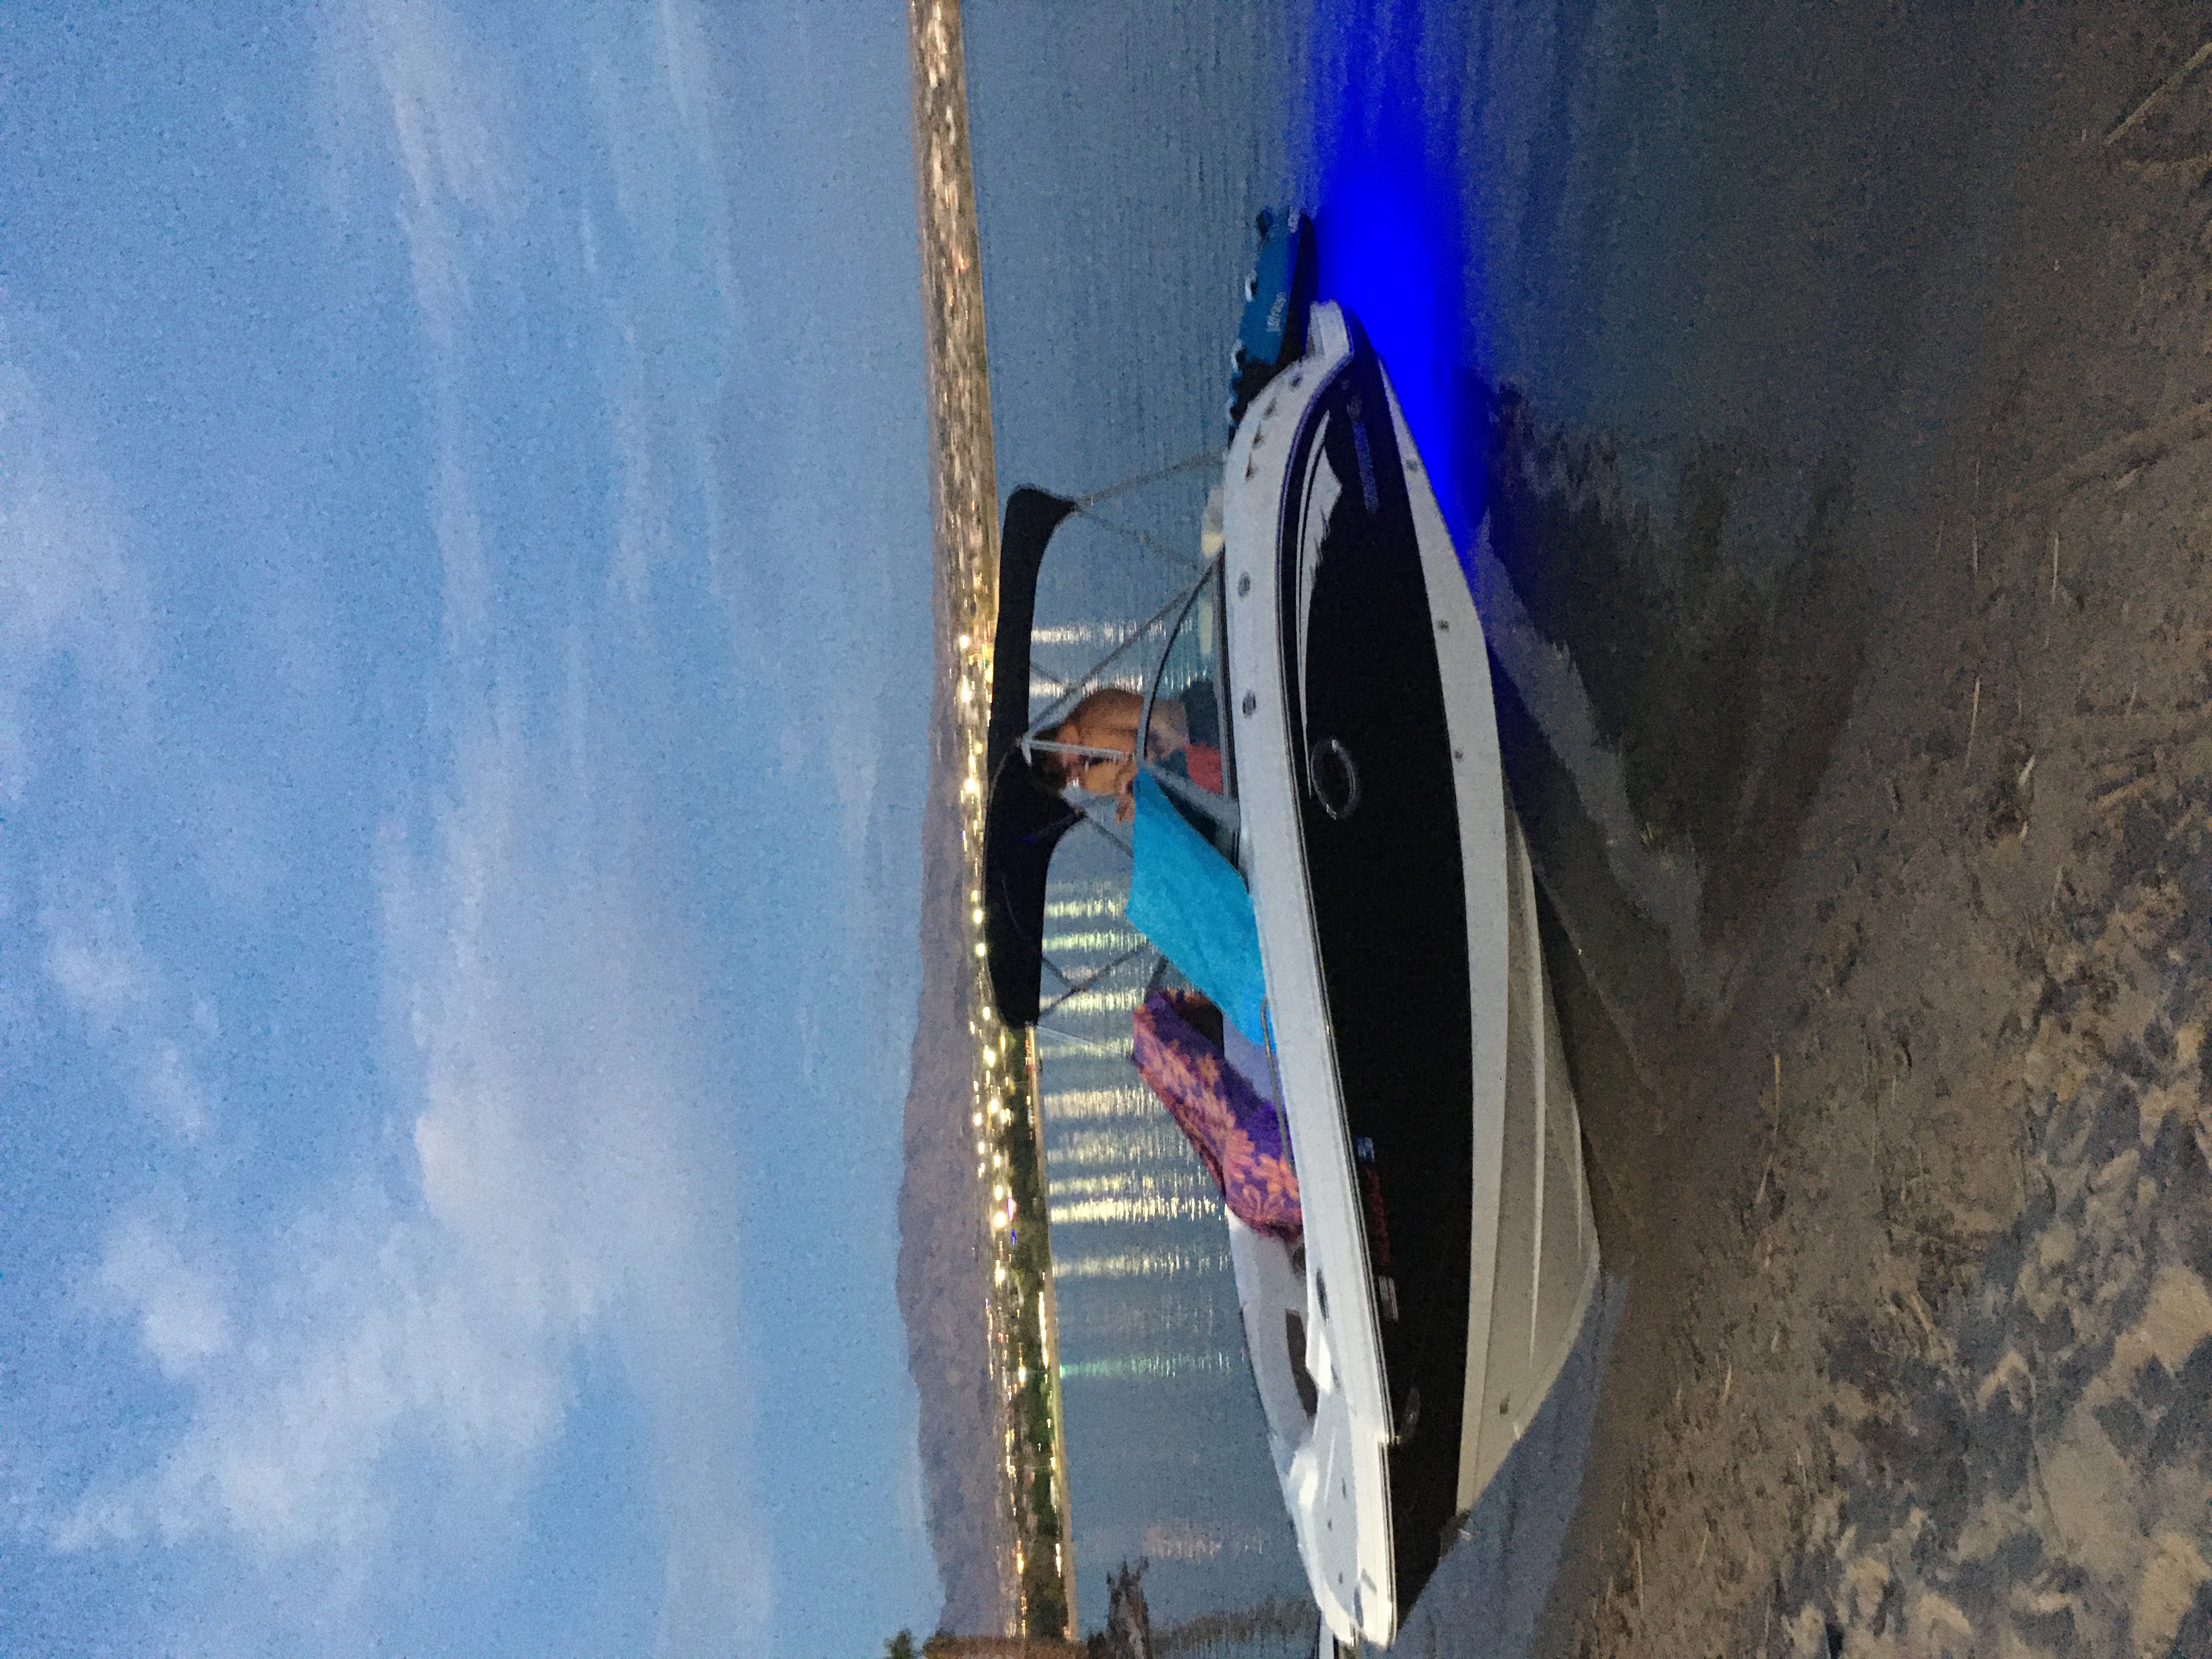 2014 Chaparral 244 Sunesta  Power boat for sale in Lk Havasu Cty, AZ - image 2 